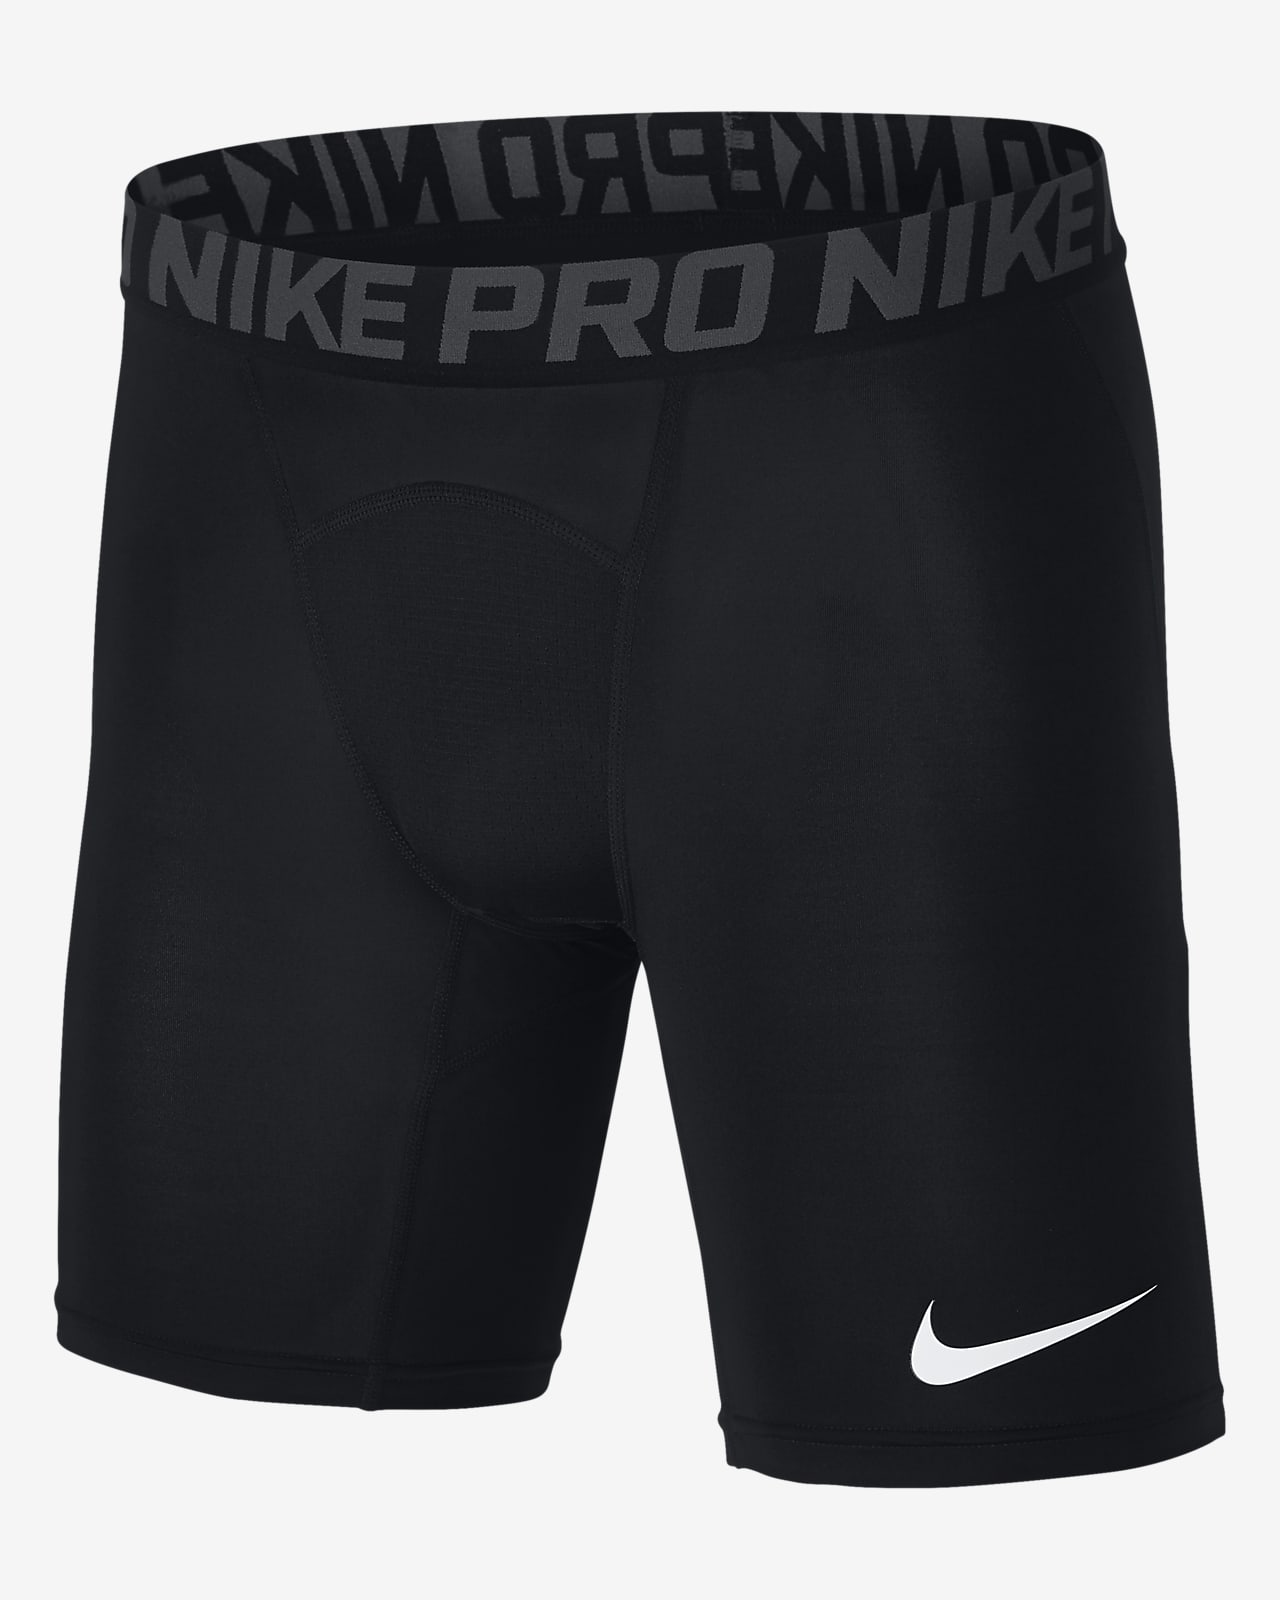 nike men's pro training shorts